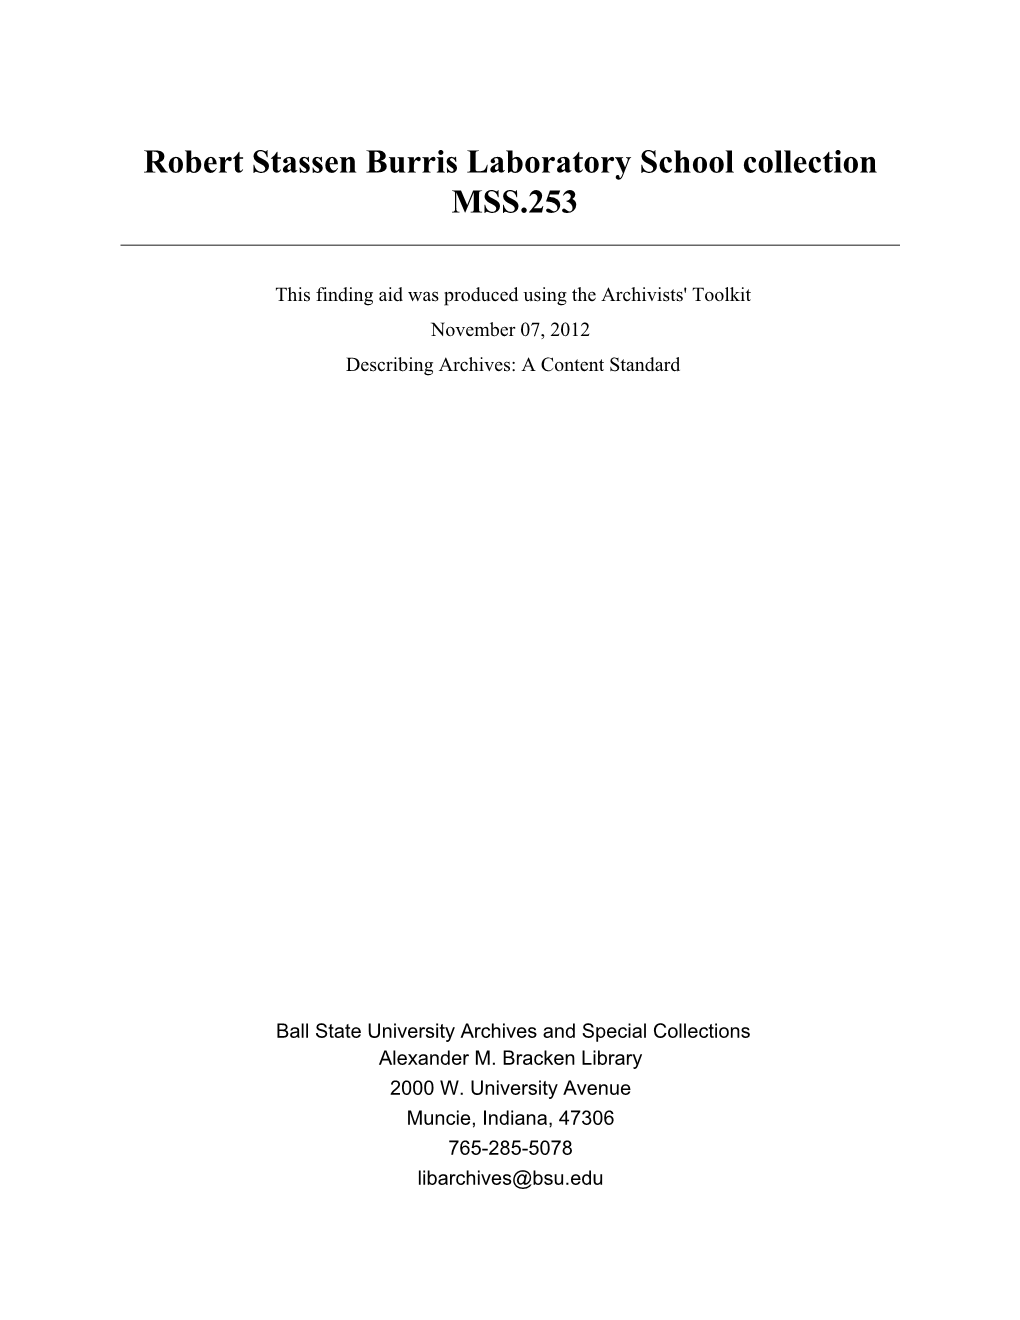 Robert Stassen Burris Laboratory School Collection MSS.253